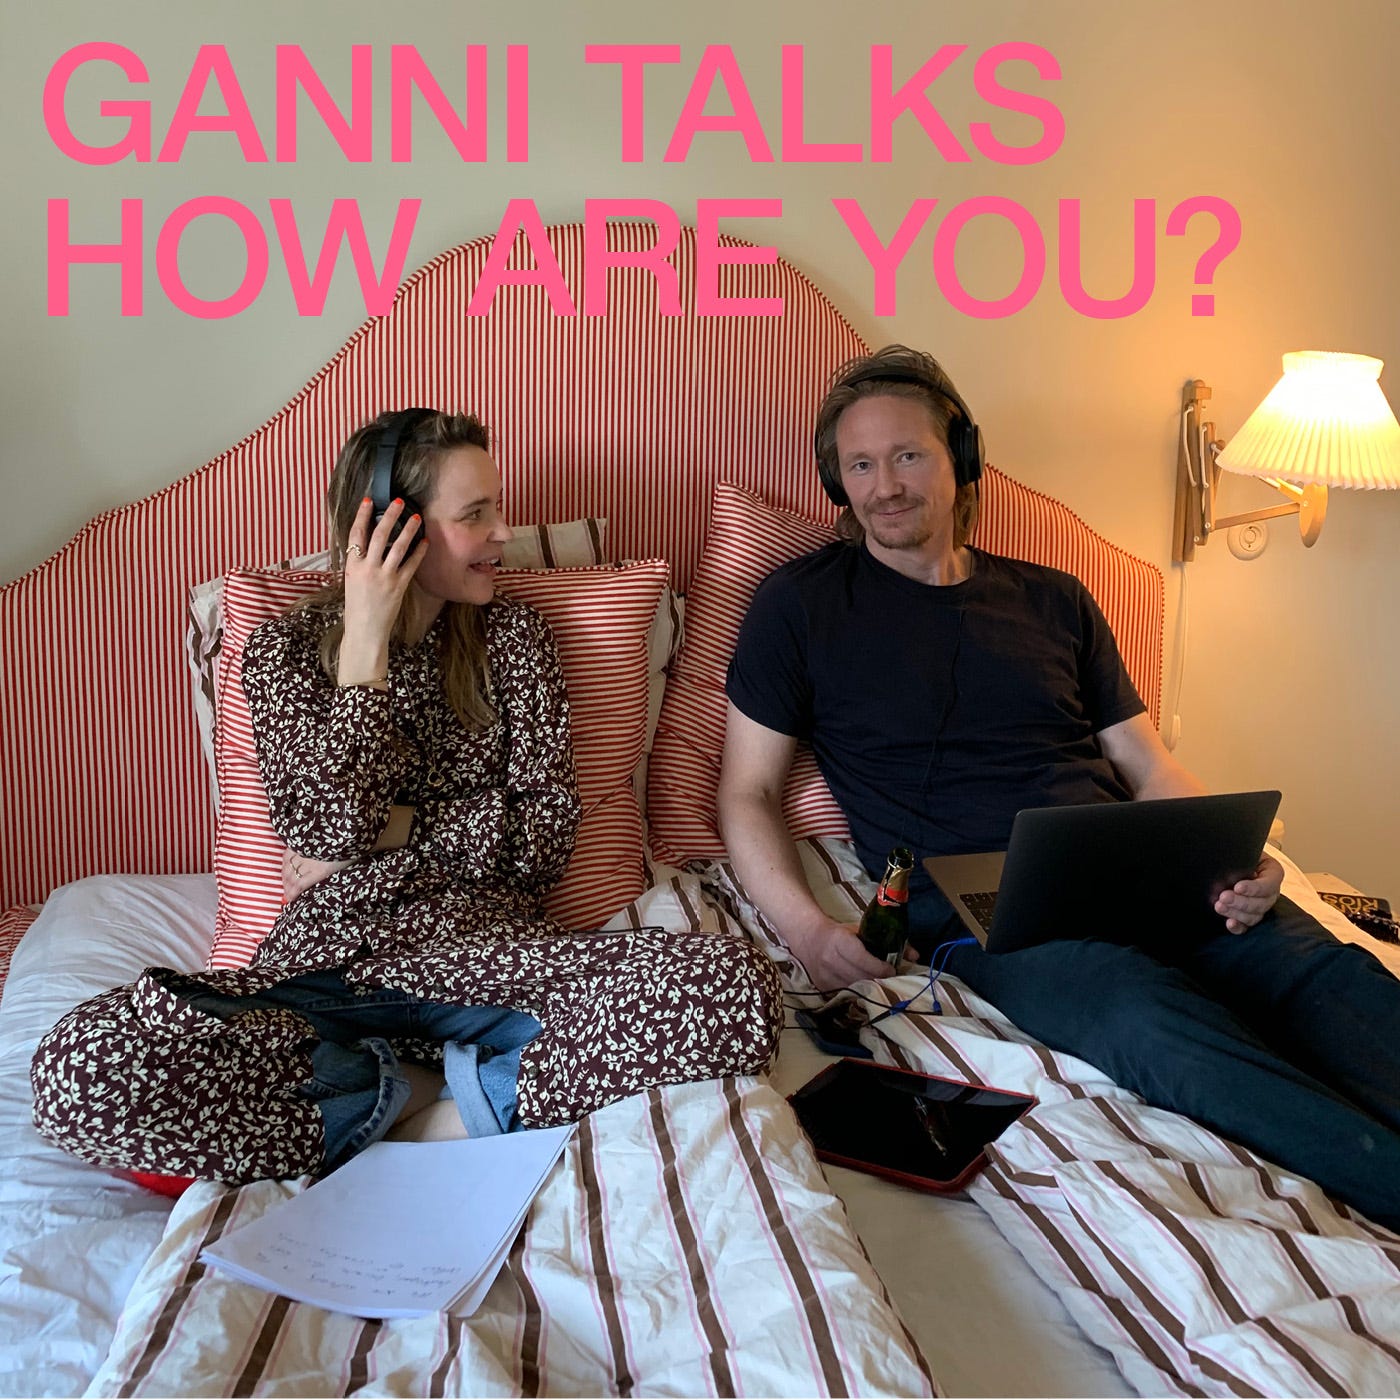 GANNI TALKS - HOW ARE YOU?